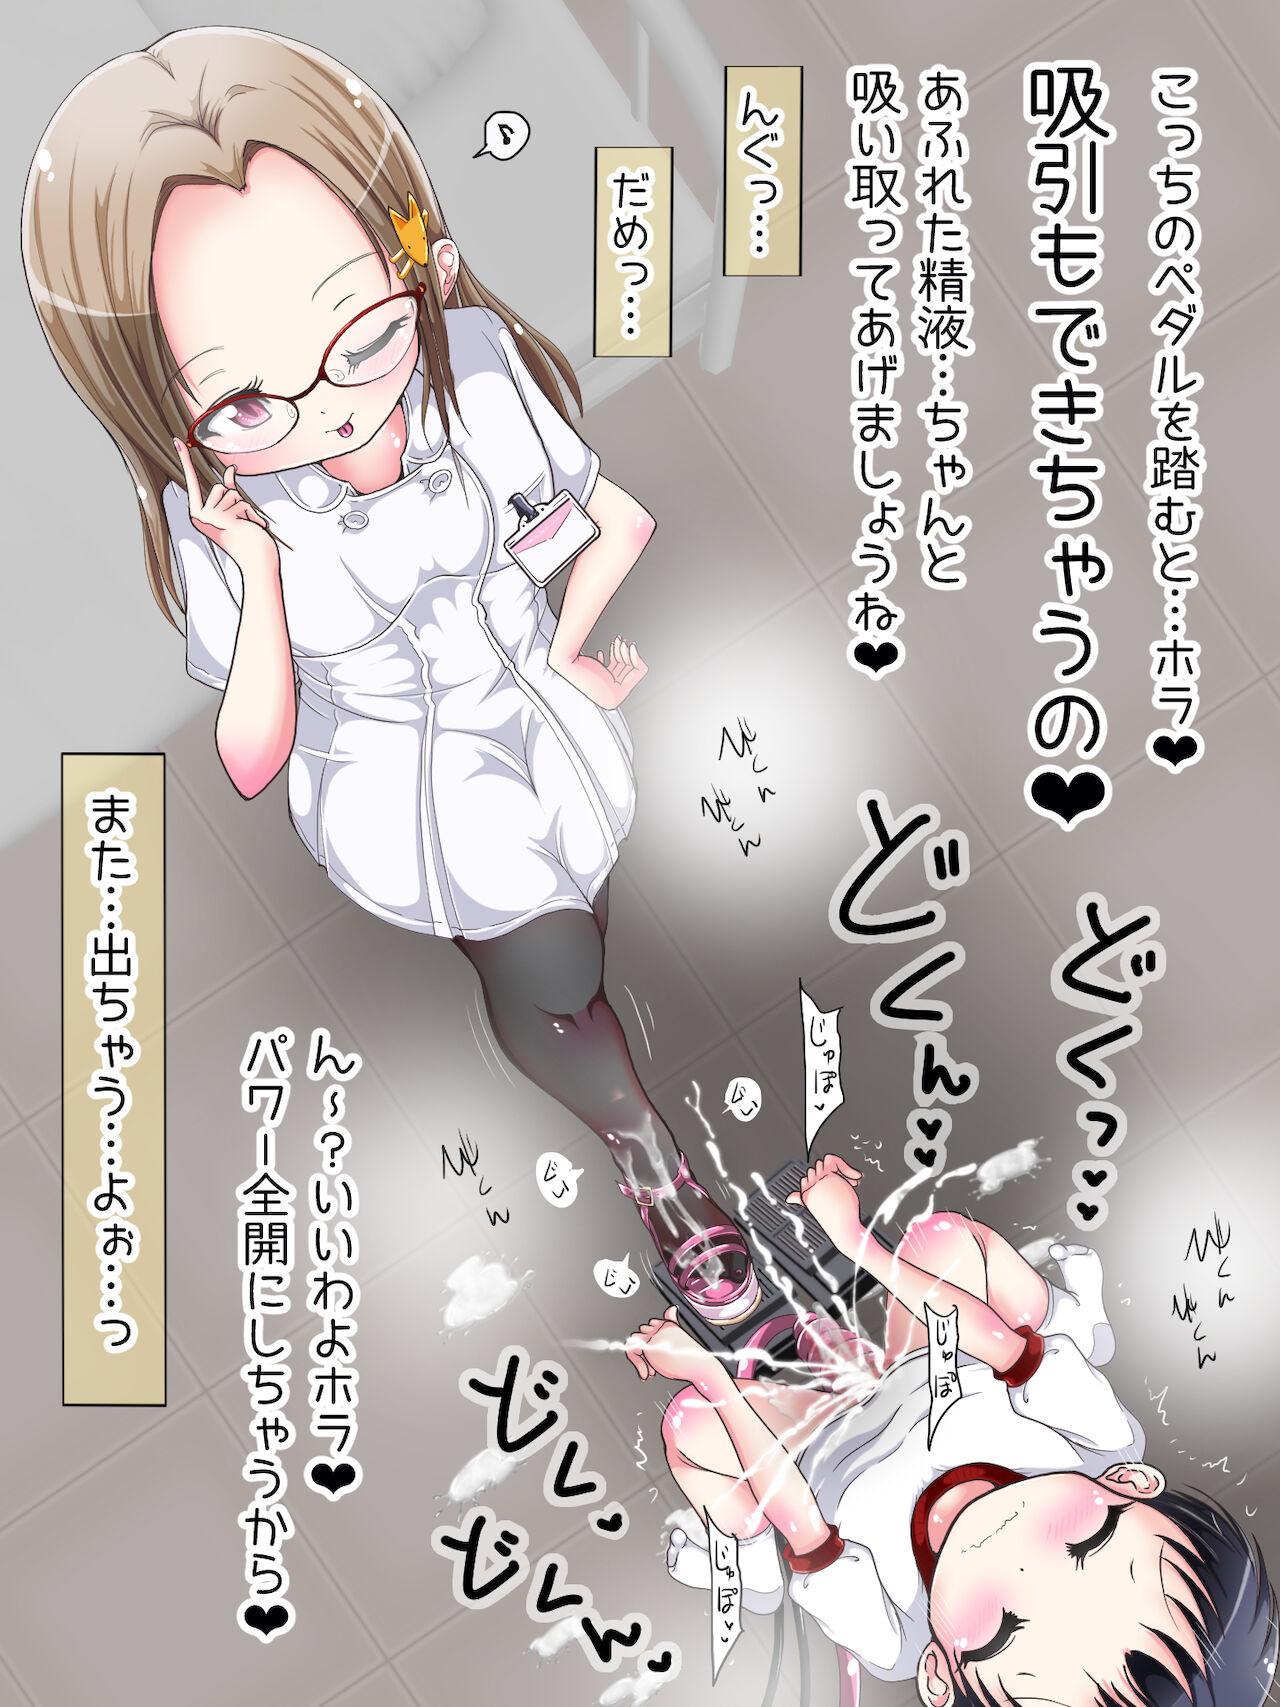 [Oneashi] One-Shota Footjob Lessons: Foot-Stroked by Nurses 248